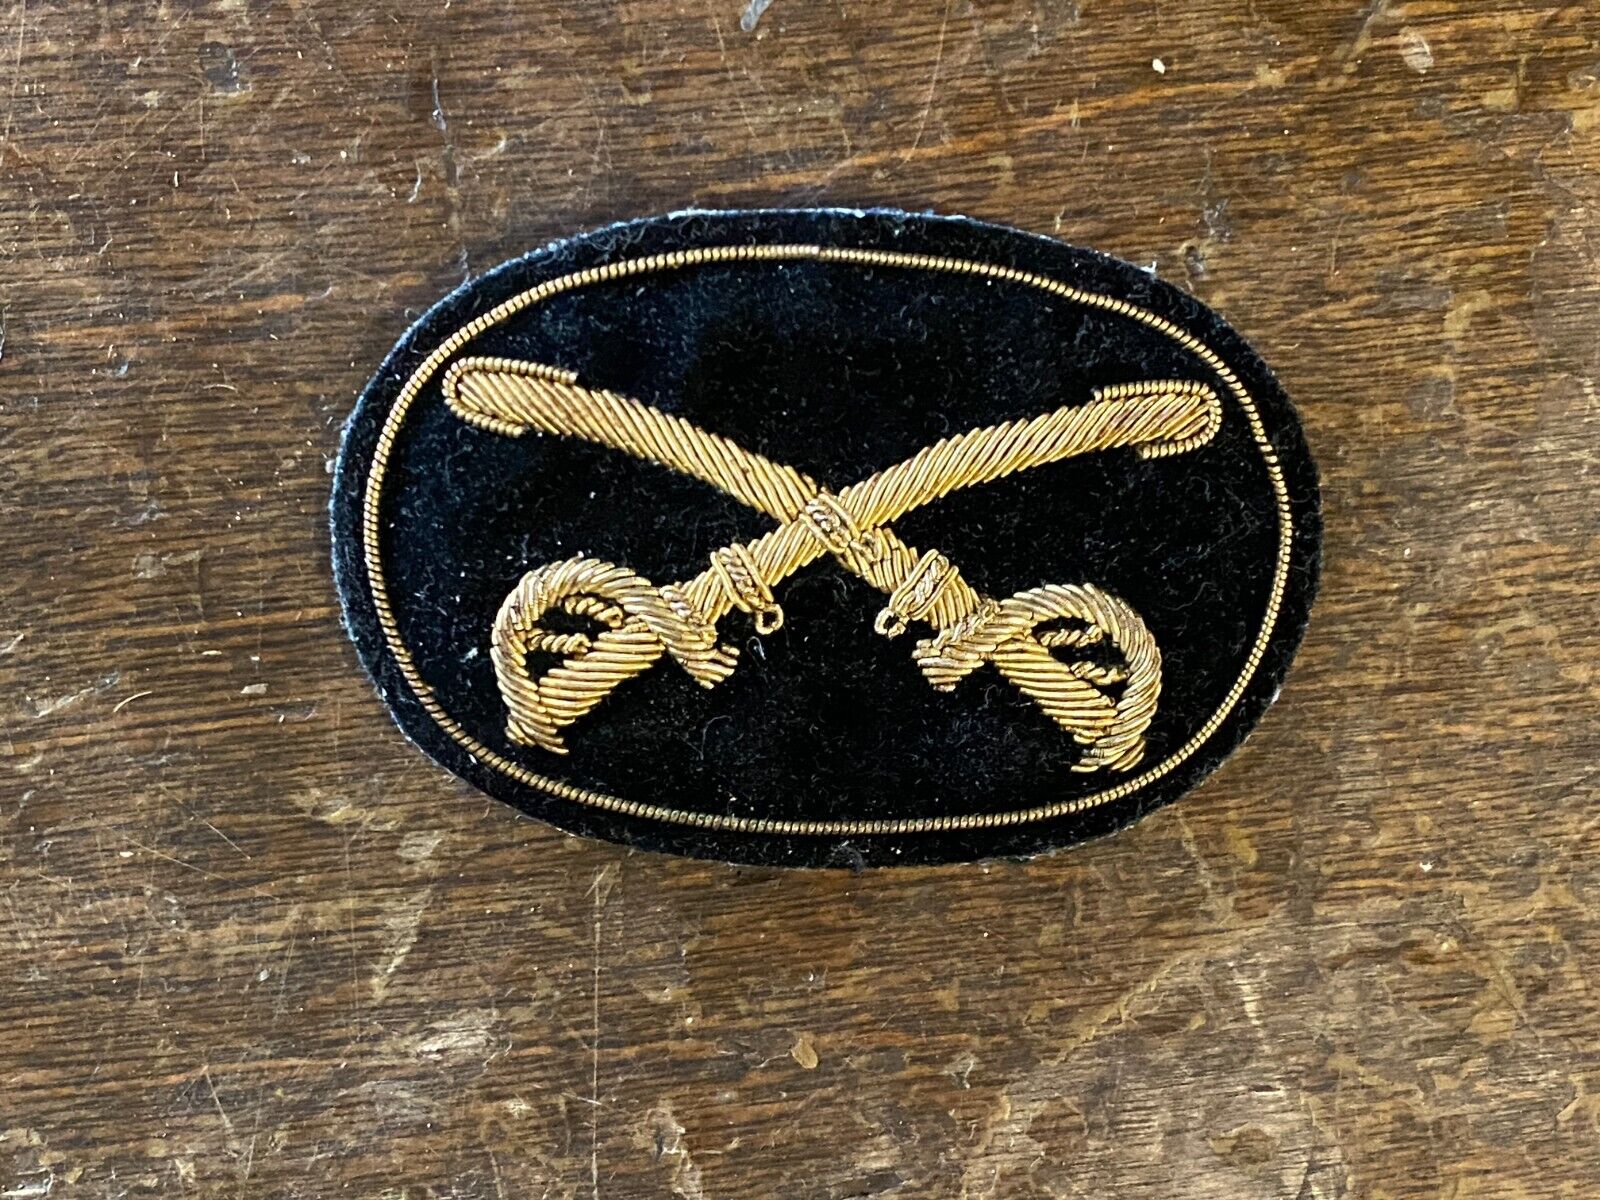  CIVIL WAR OfficersCavalry Cap Kepi Insignia / Gold Bullion Hat Badge